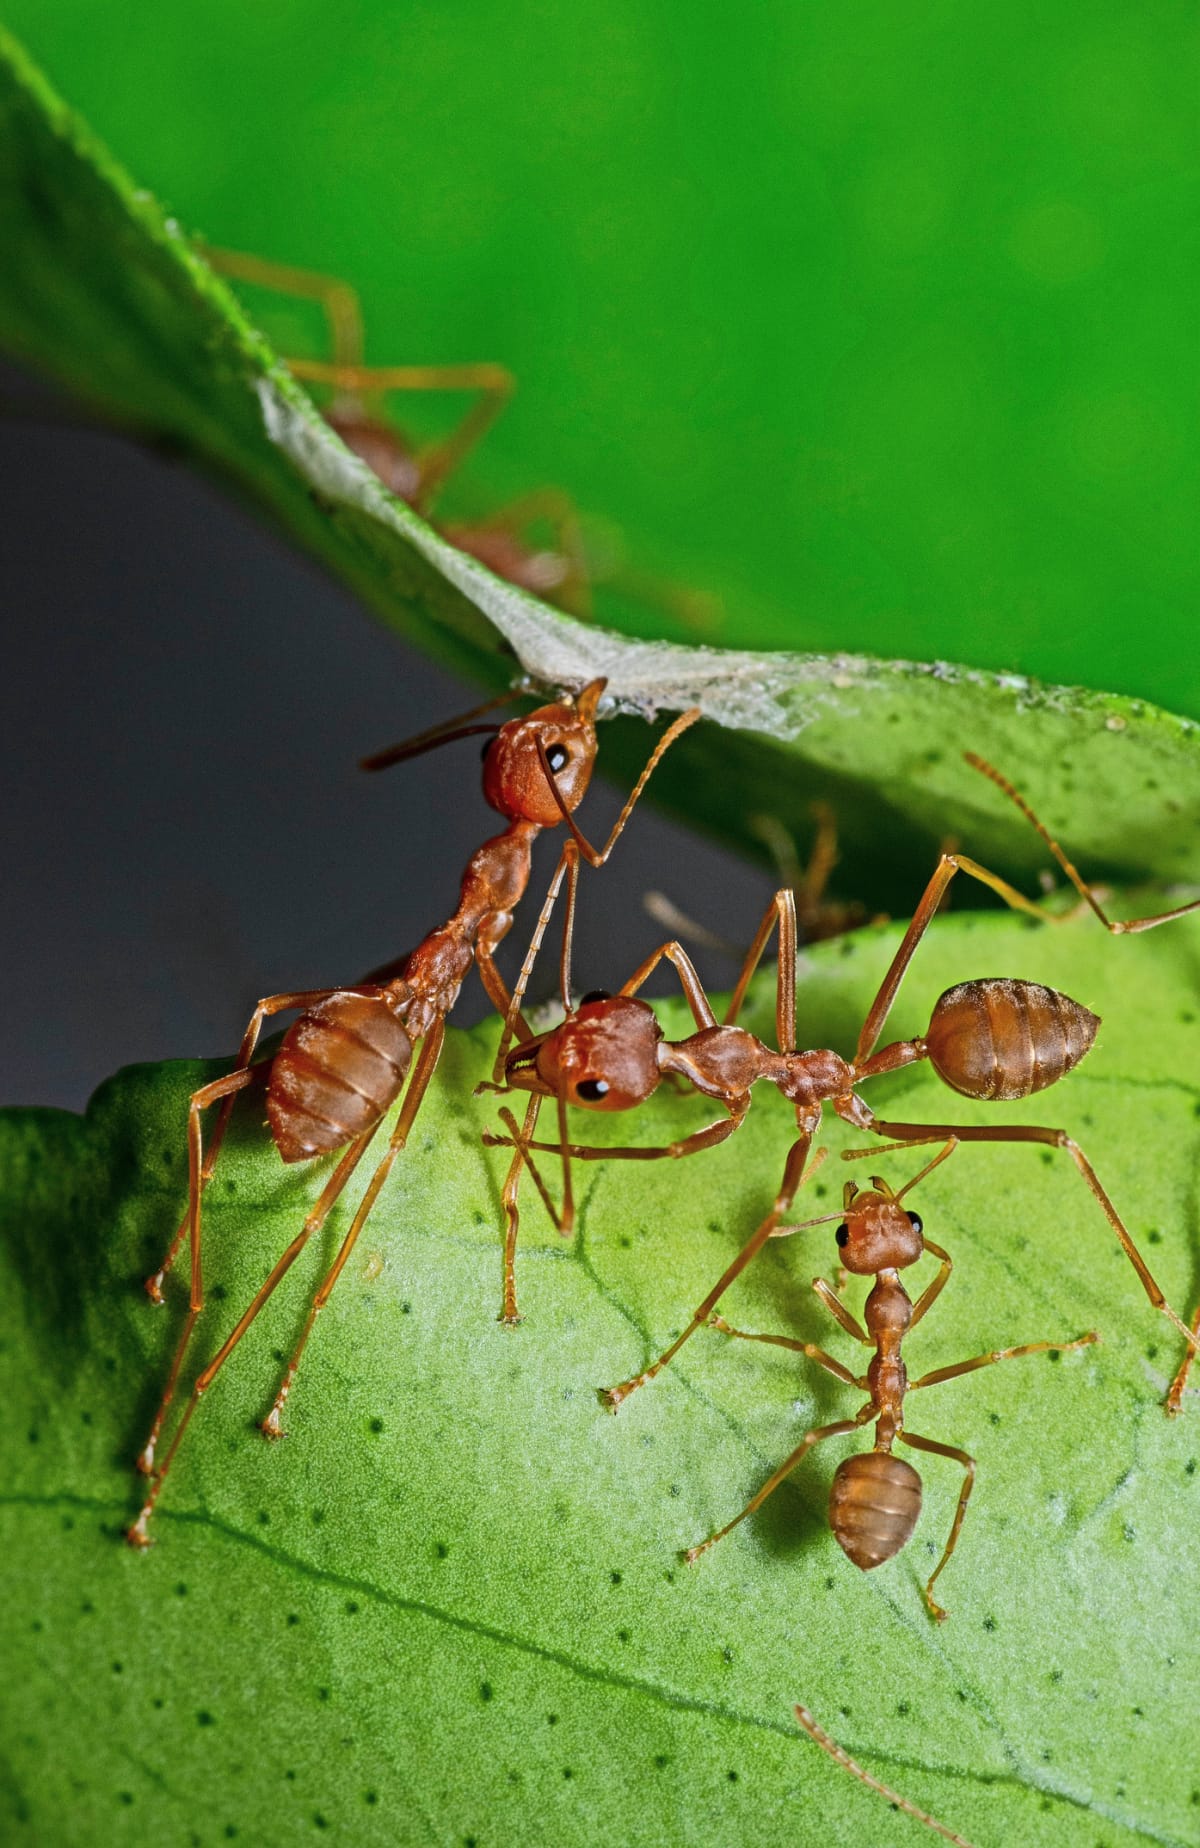 Ants biting plant leaves